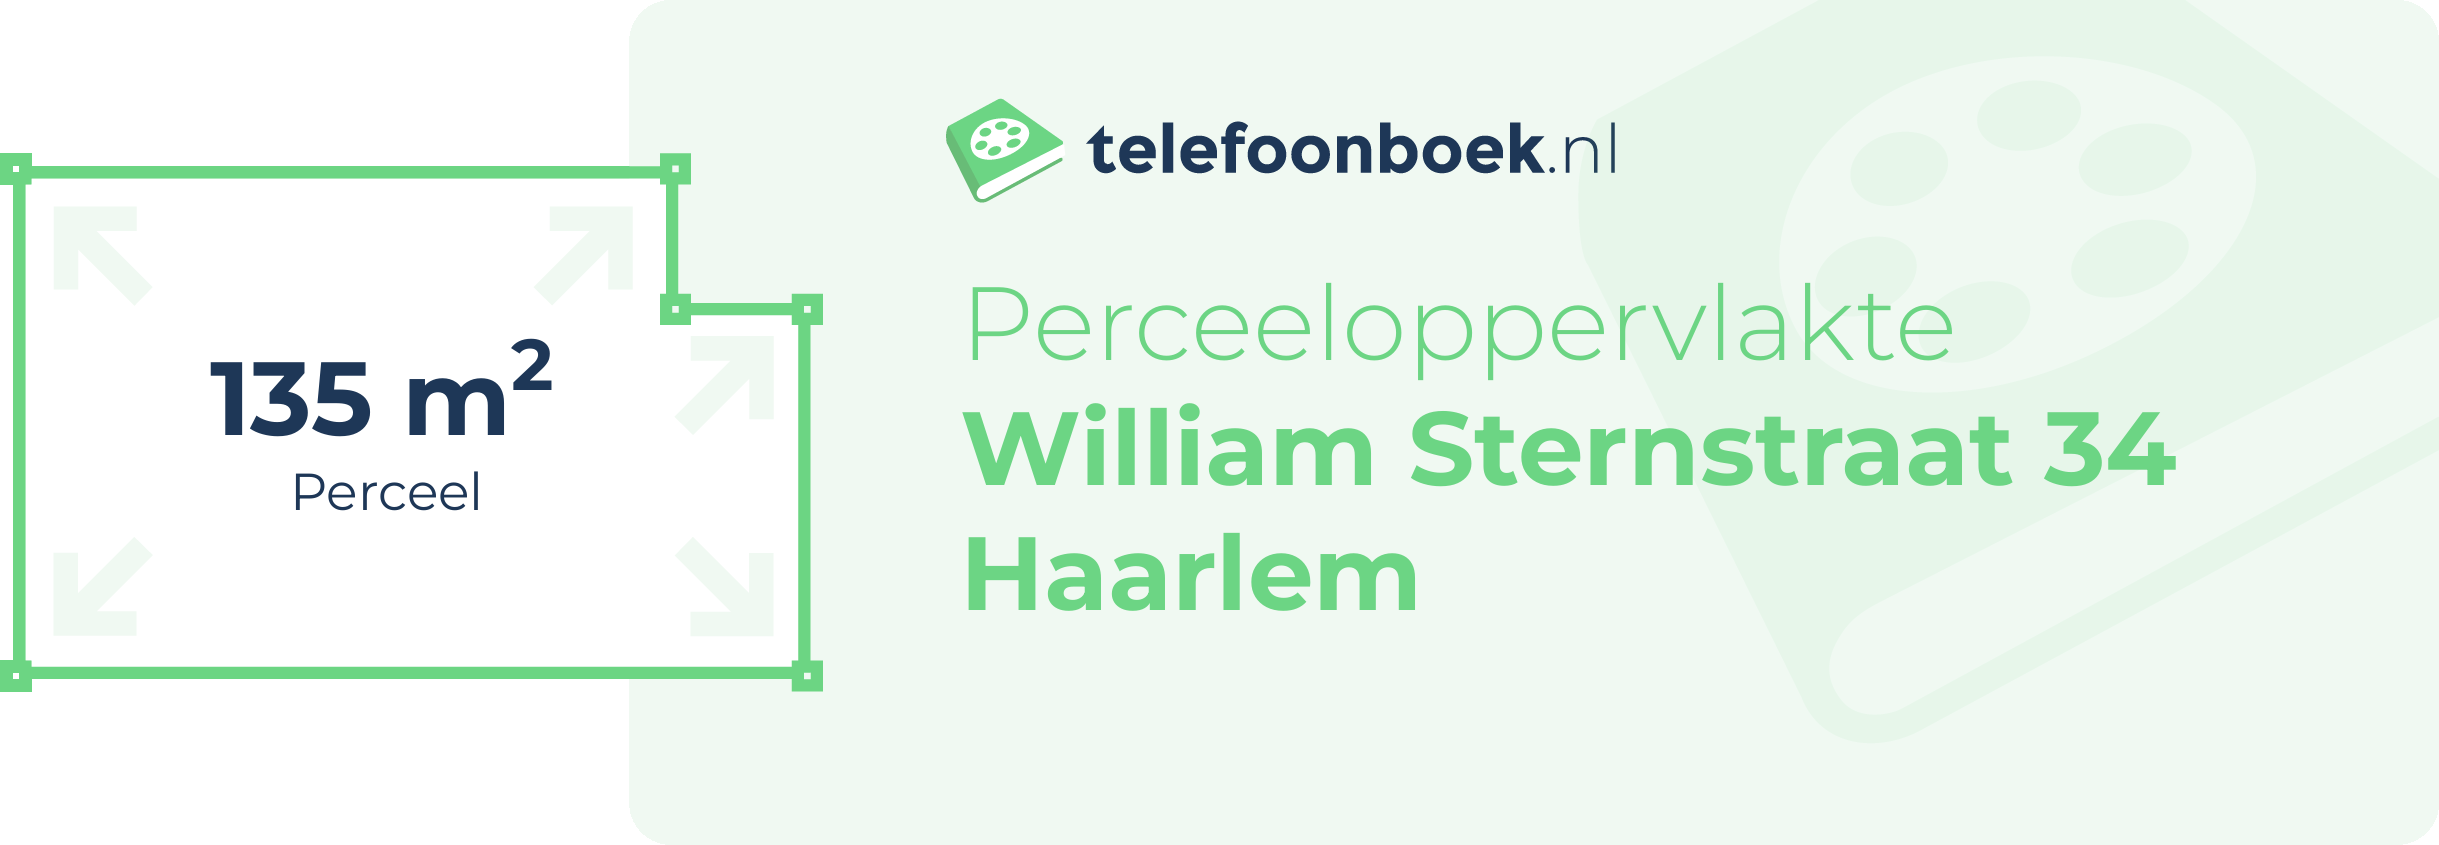 Perceeloppervlakte William Sternstraat 34 Haarlem